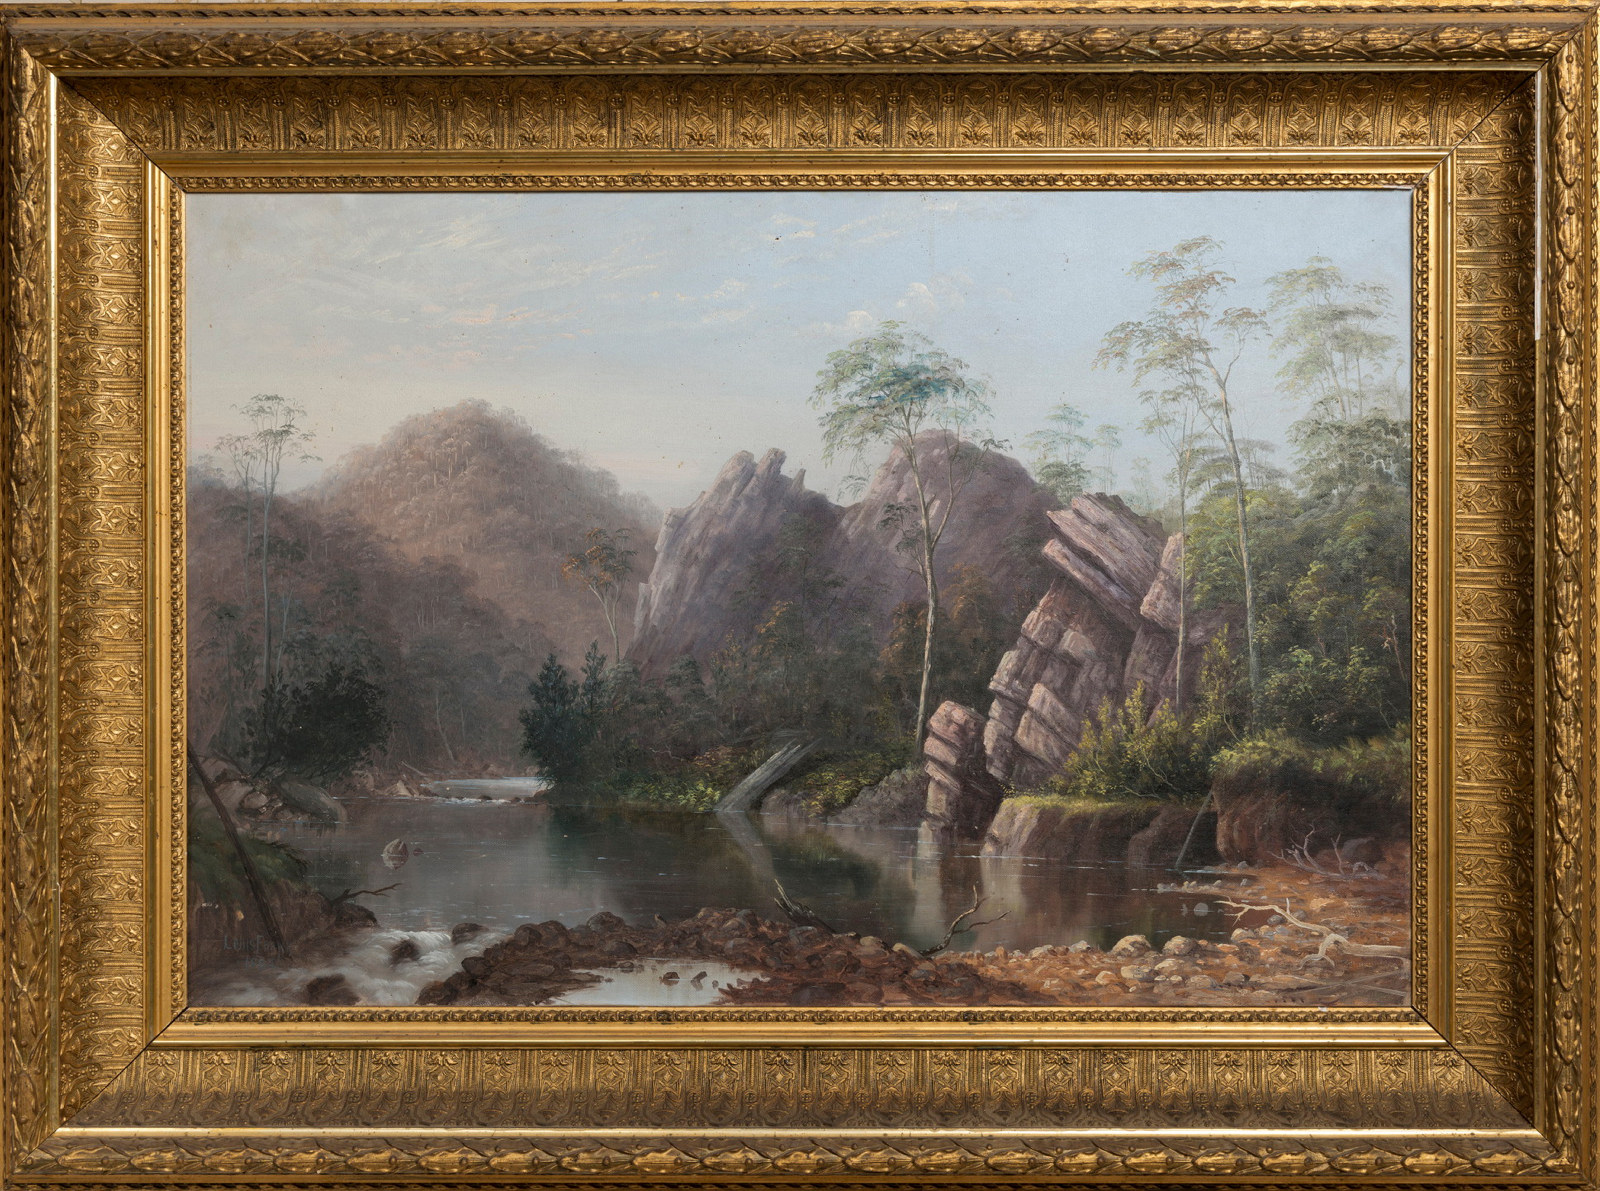 Oil painting: Upper Shoalhaven River, by Louis Frank, Australia, 1884